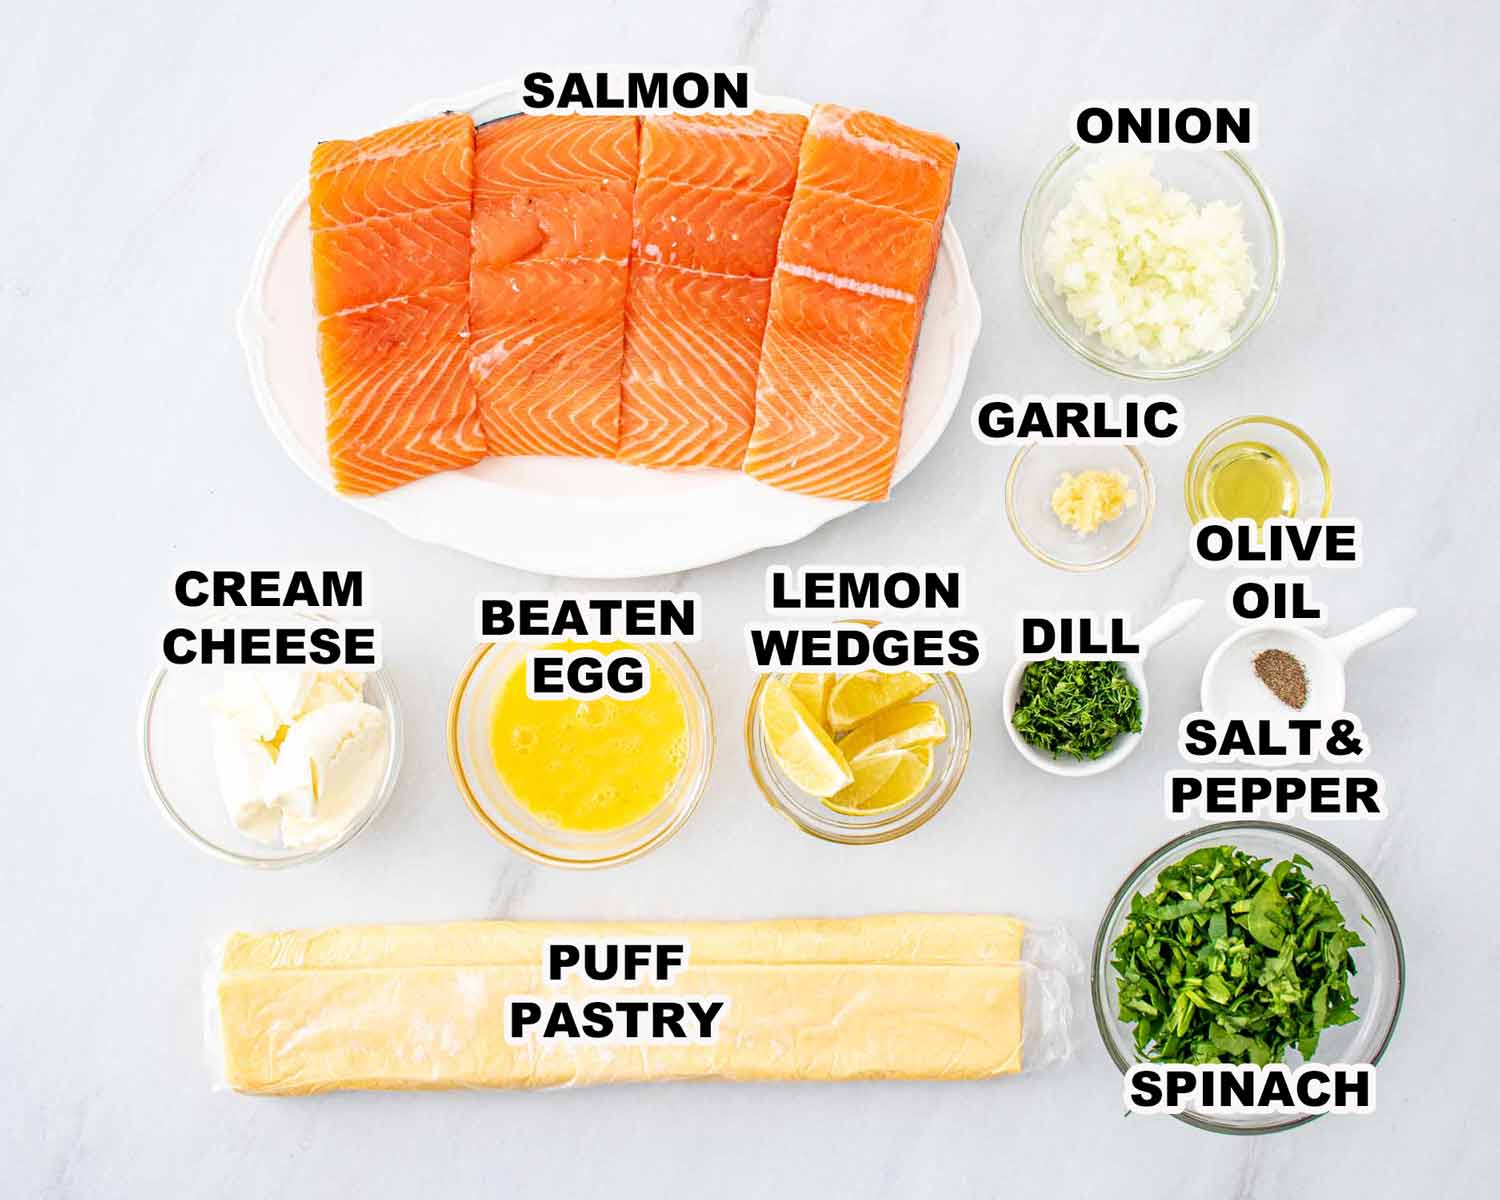 ingredients needed to make salmon wellington.